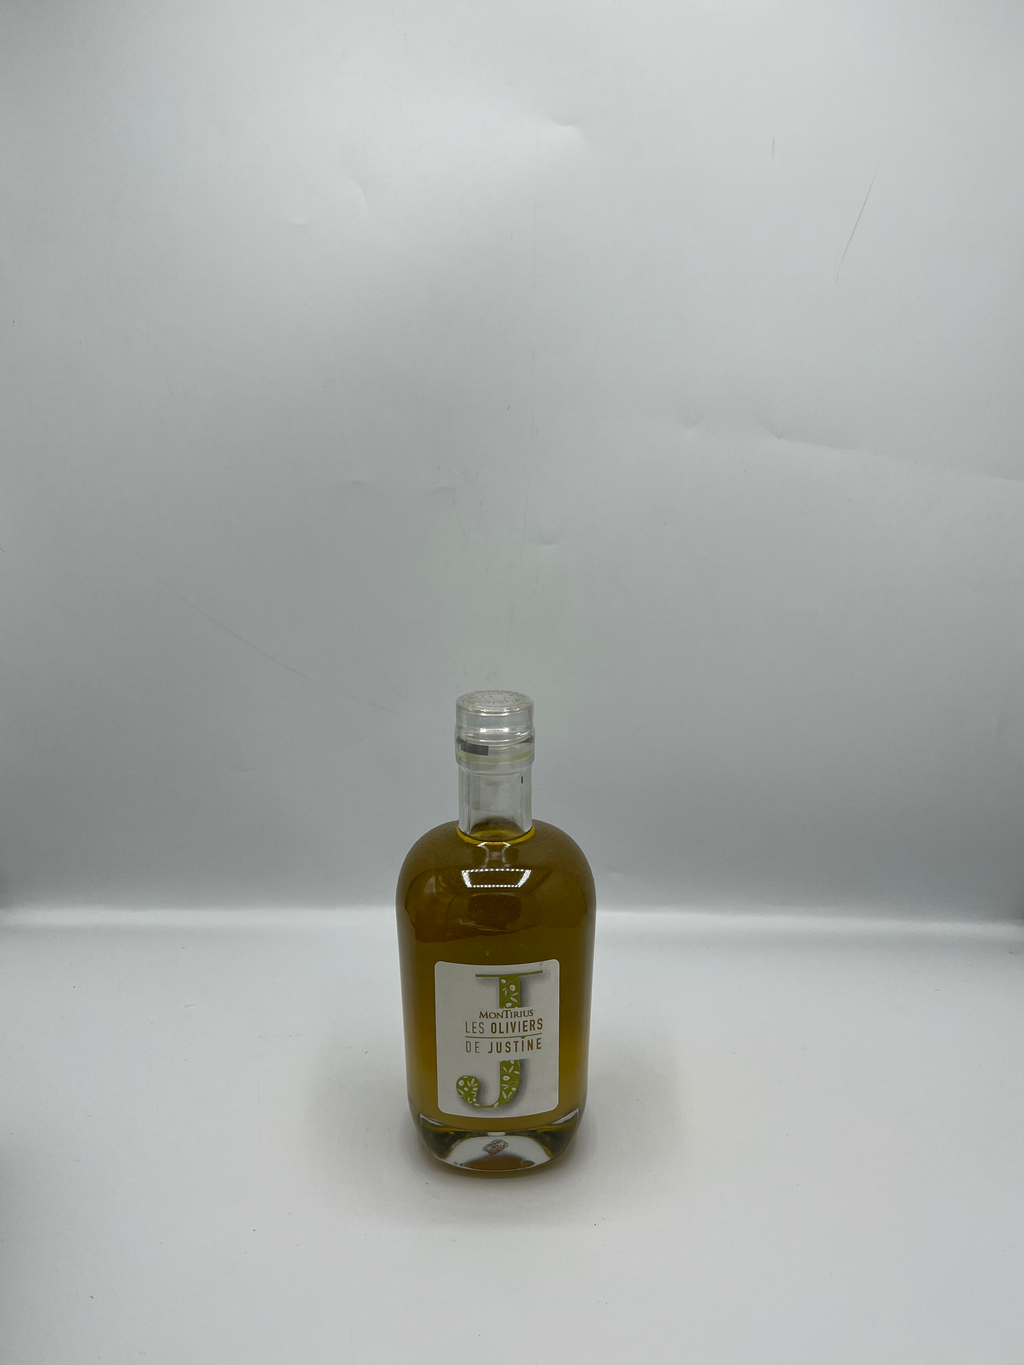 Extra Virgin Olive Oil “Les Oliviers de Justine” - Domaine Montirius 